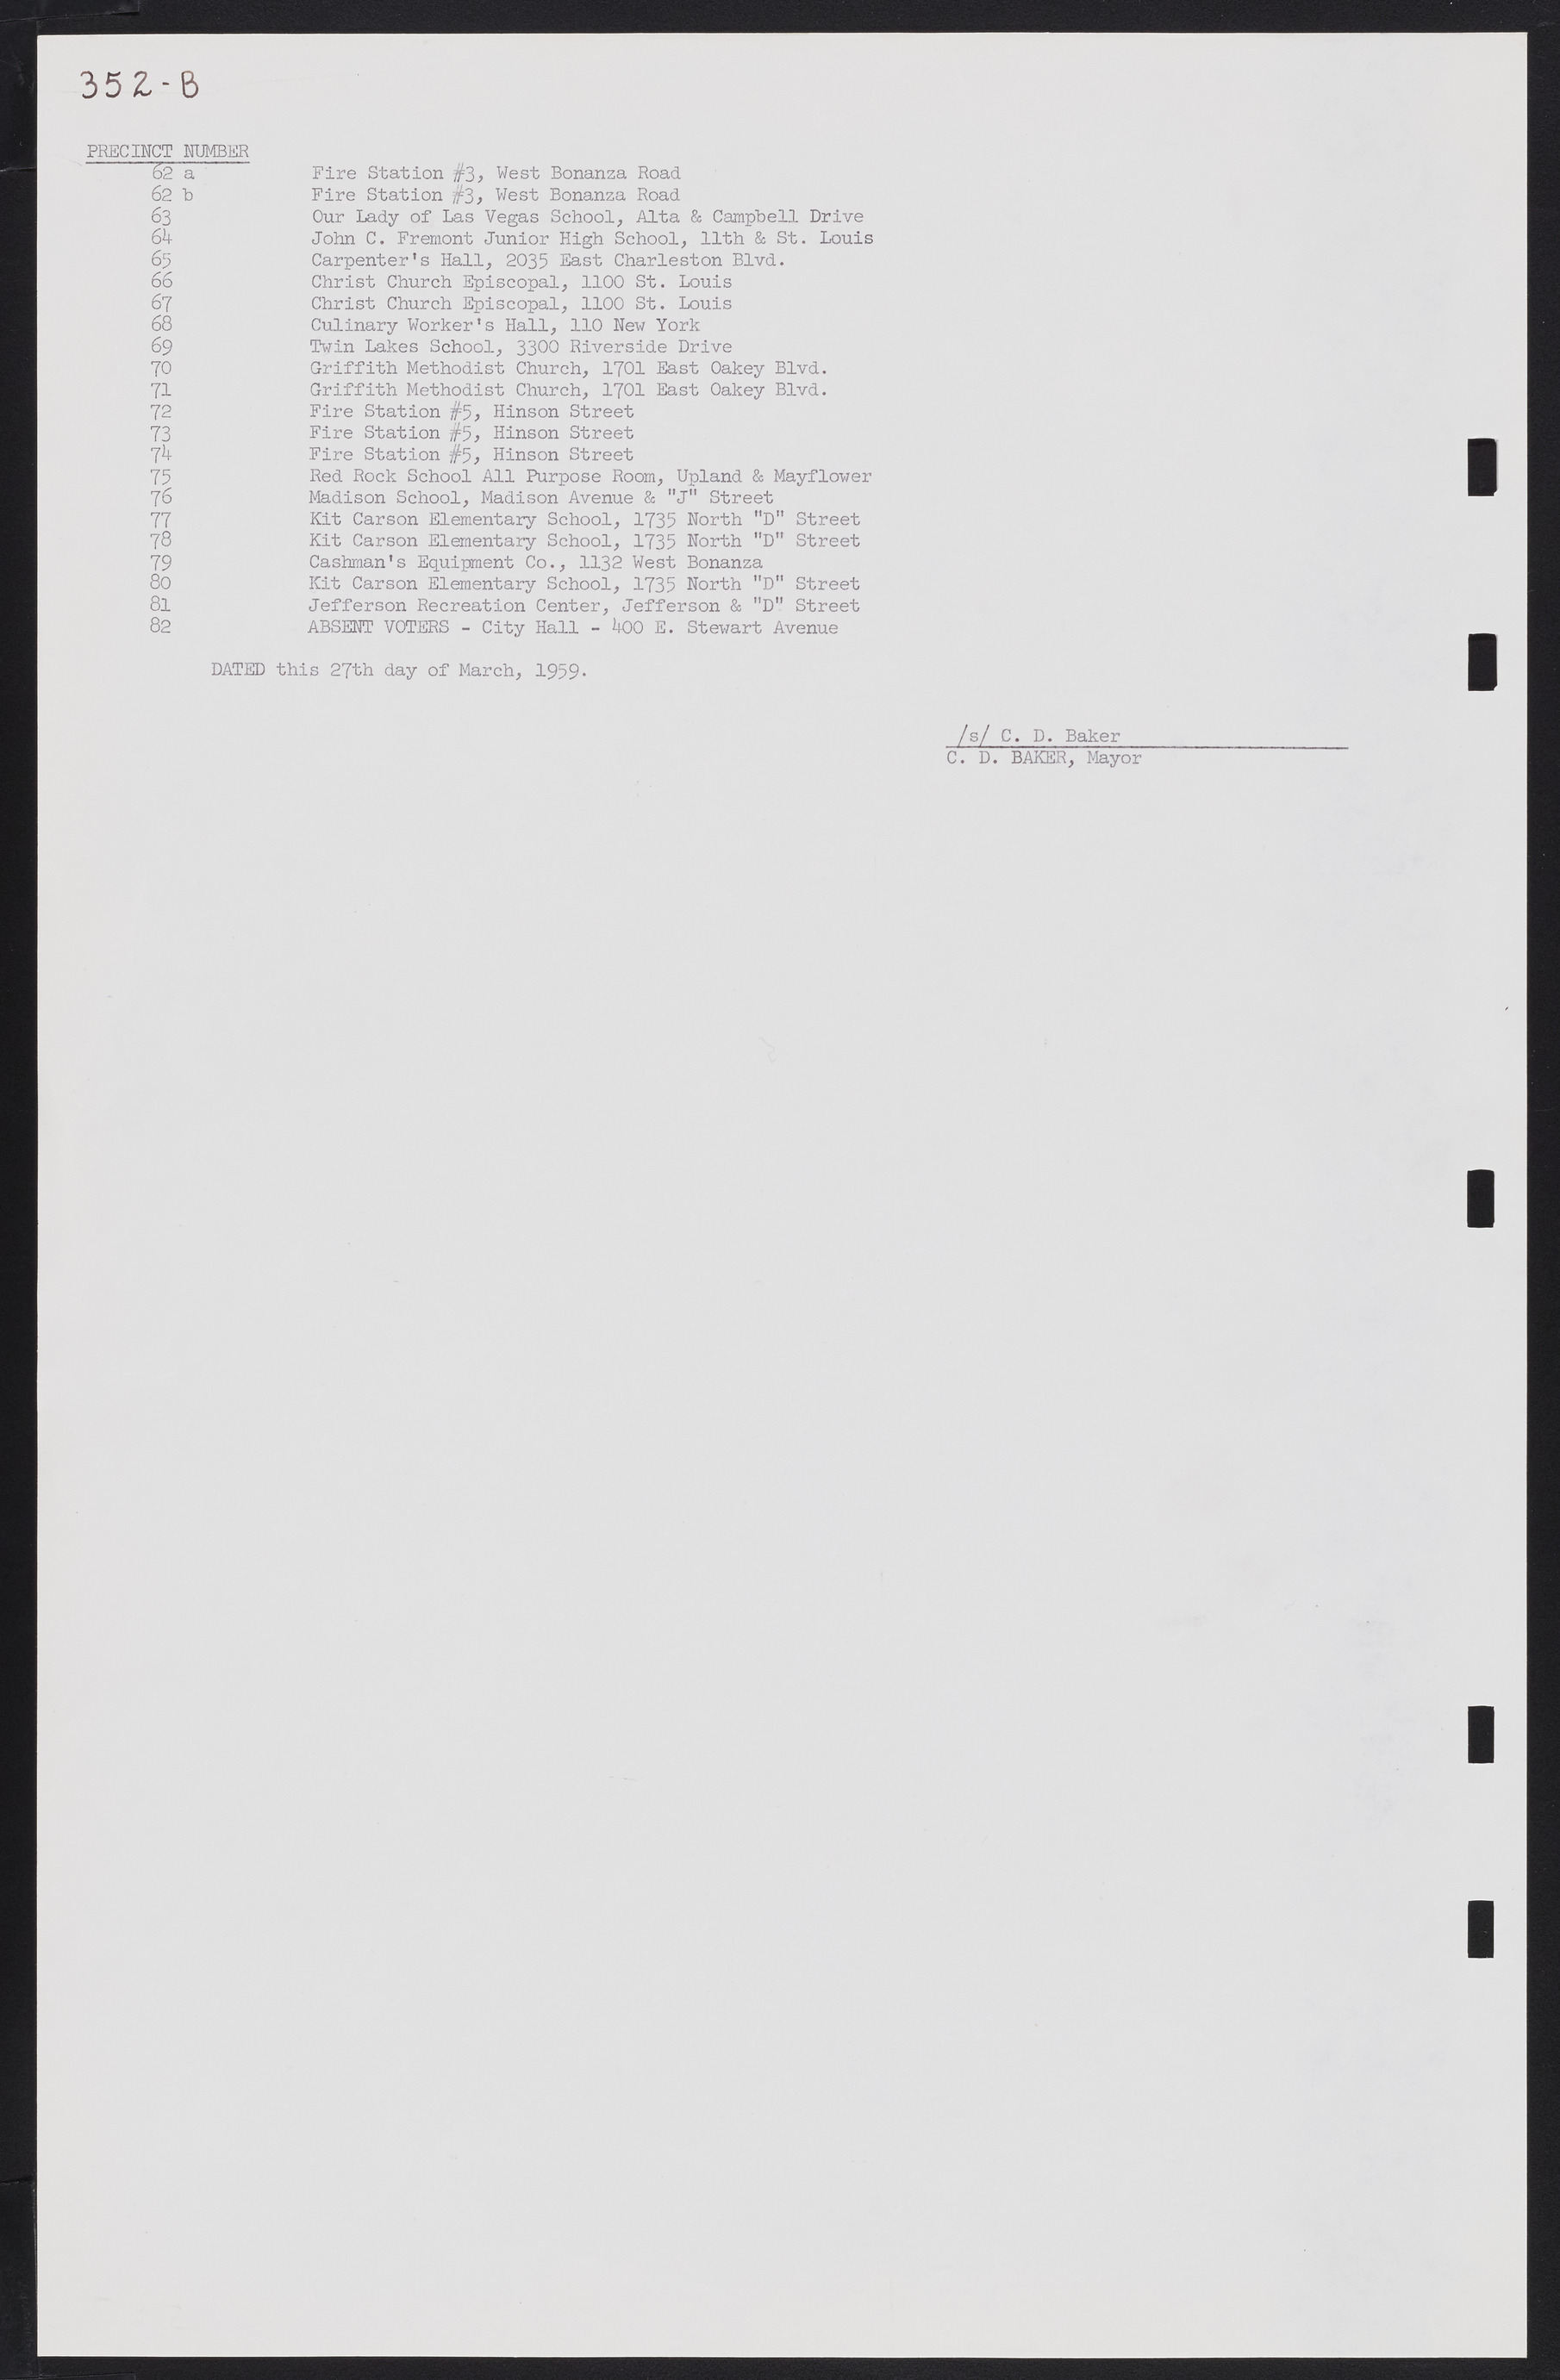 Las Vegas City Commission Minutes, November 20, 1957 to December 2, 1959, lvc000011-362